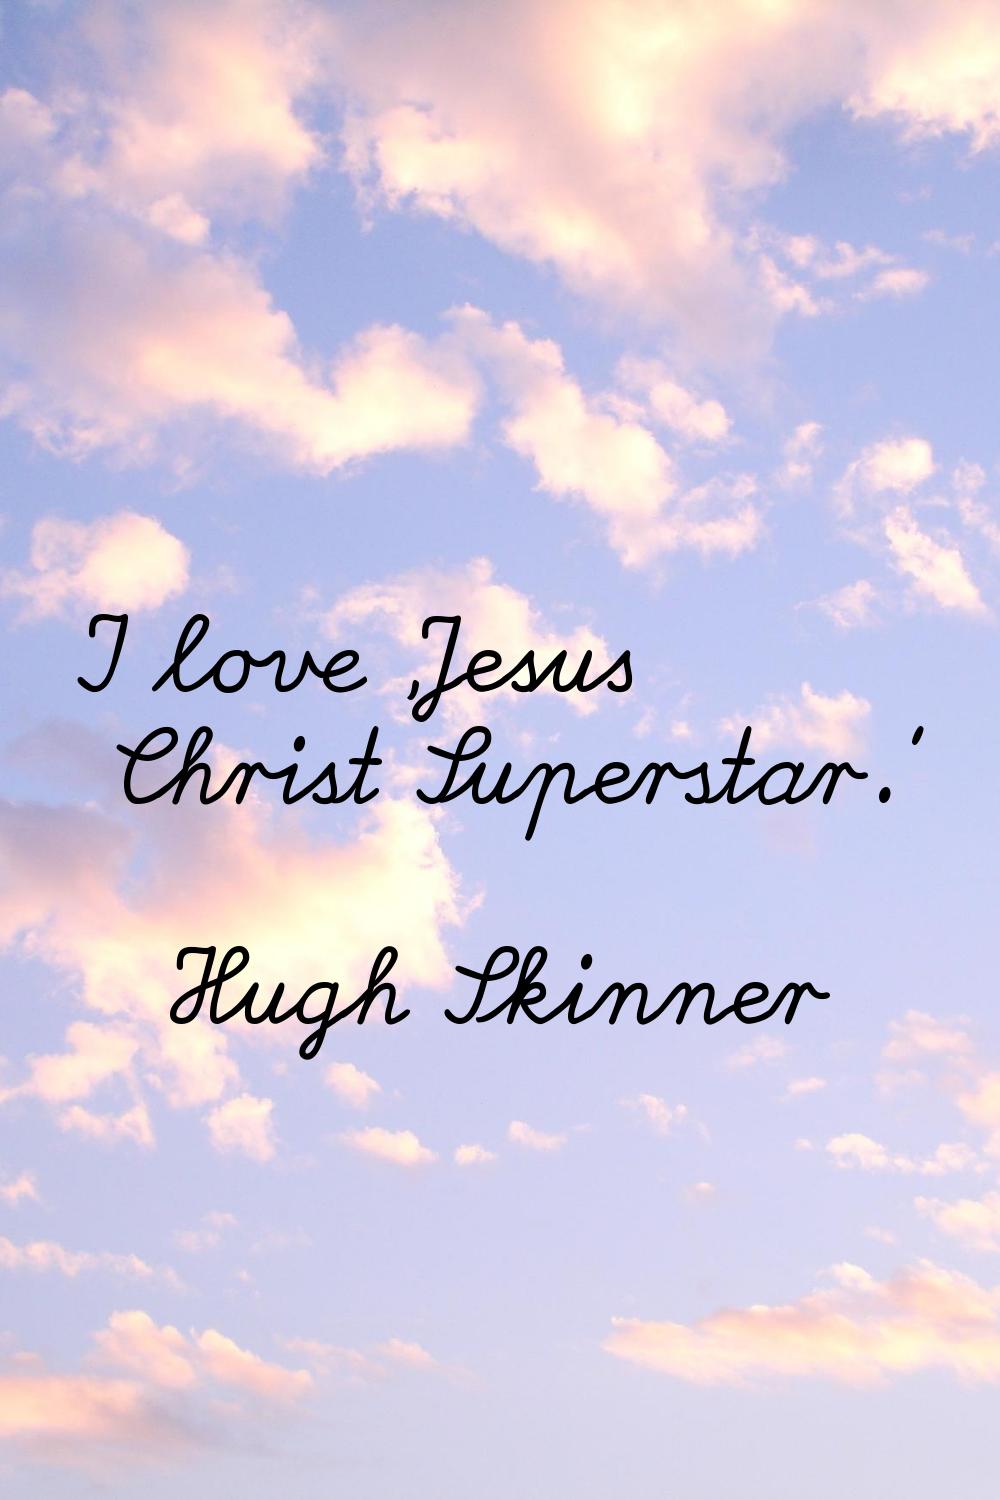 I love 'Jesus Christ Superstar.'